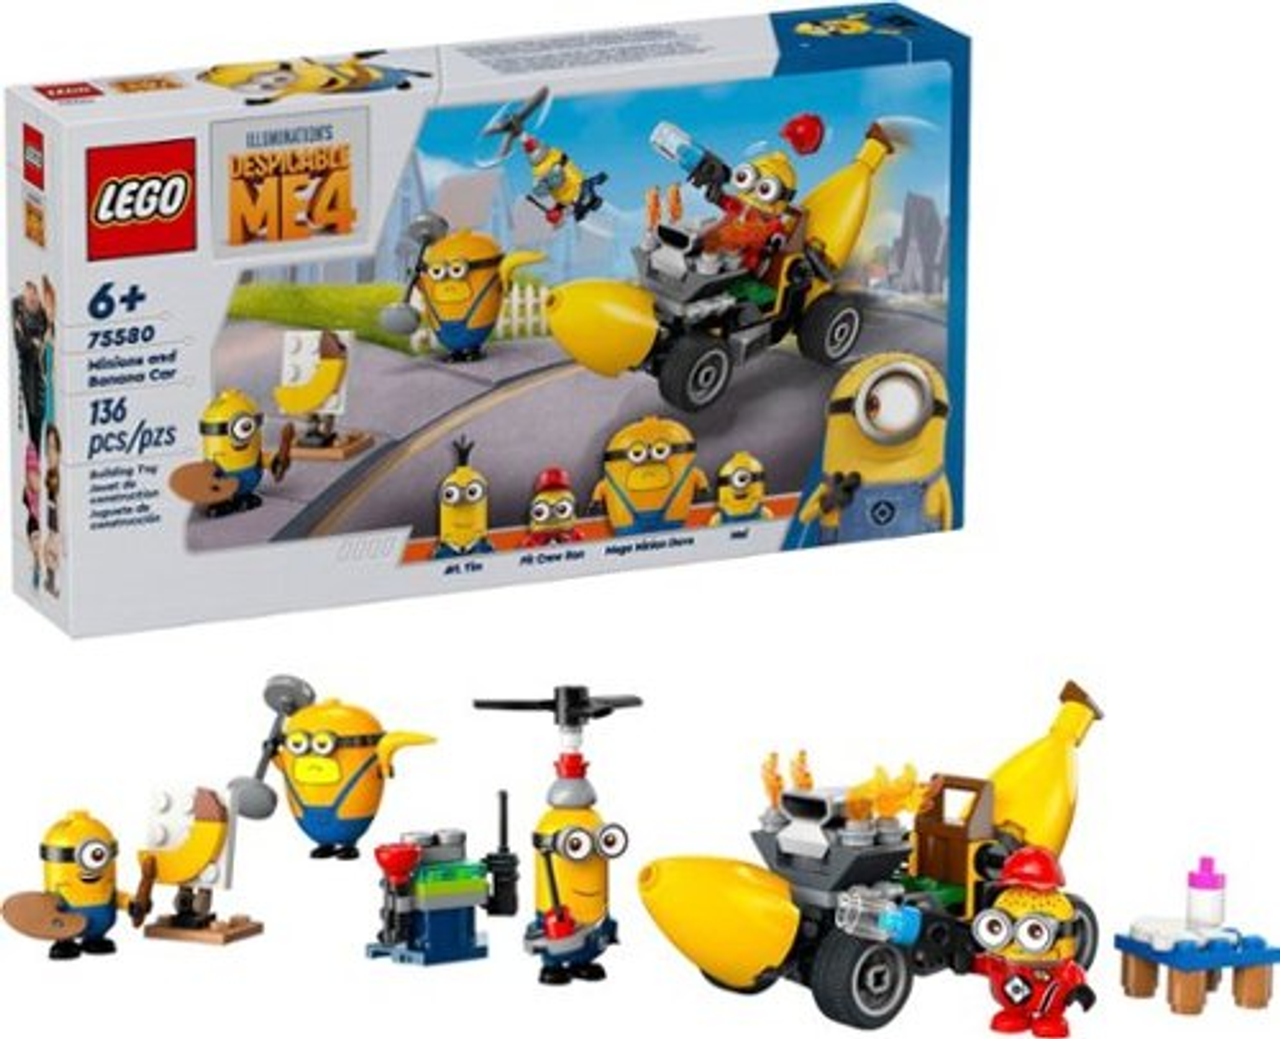 LEGO - Despicable Me 4 Minions and Banana Car Toy 75580